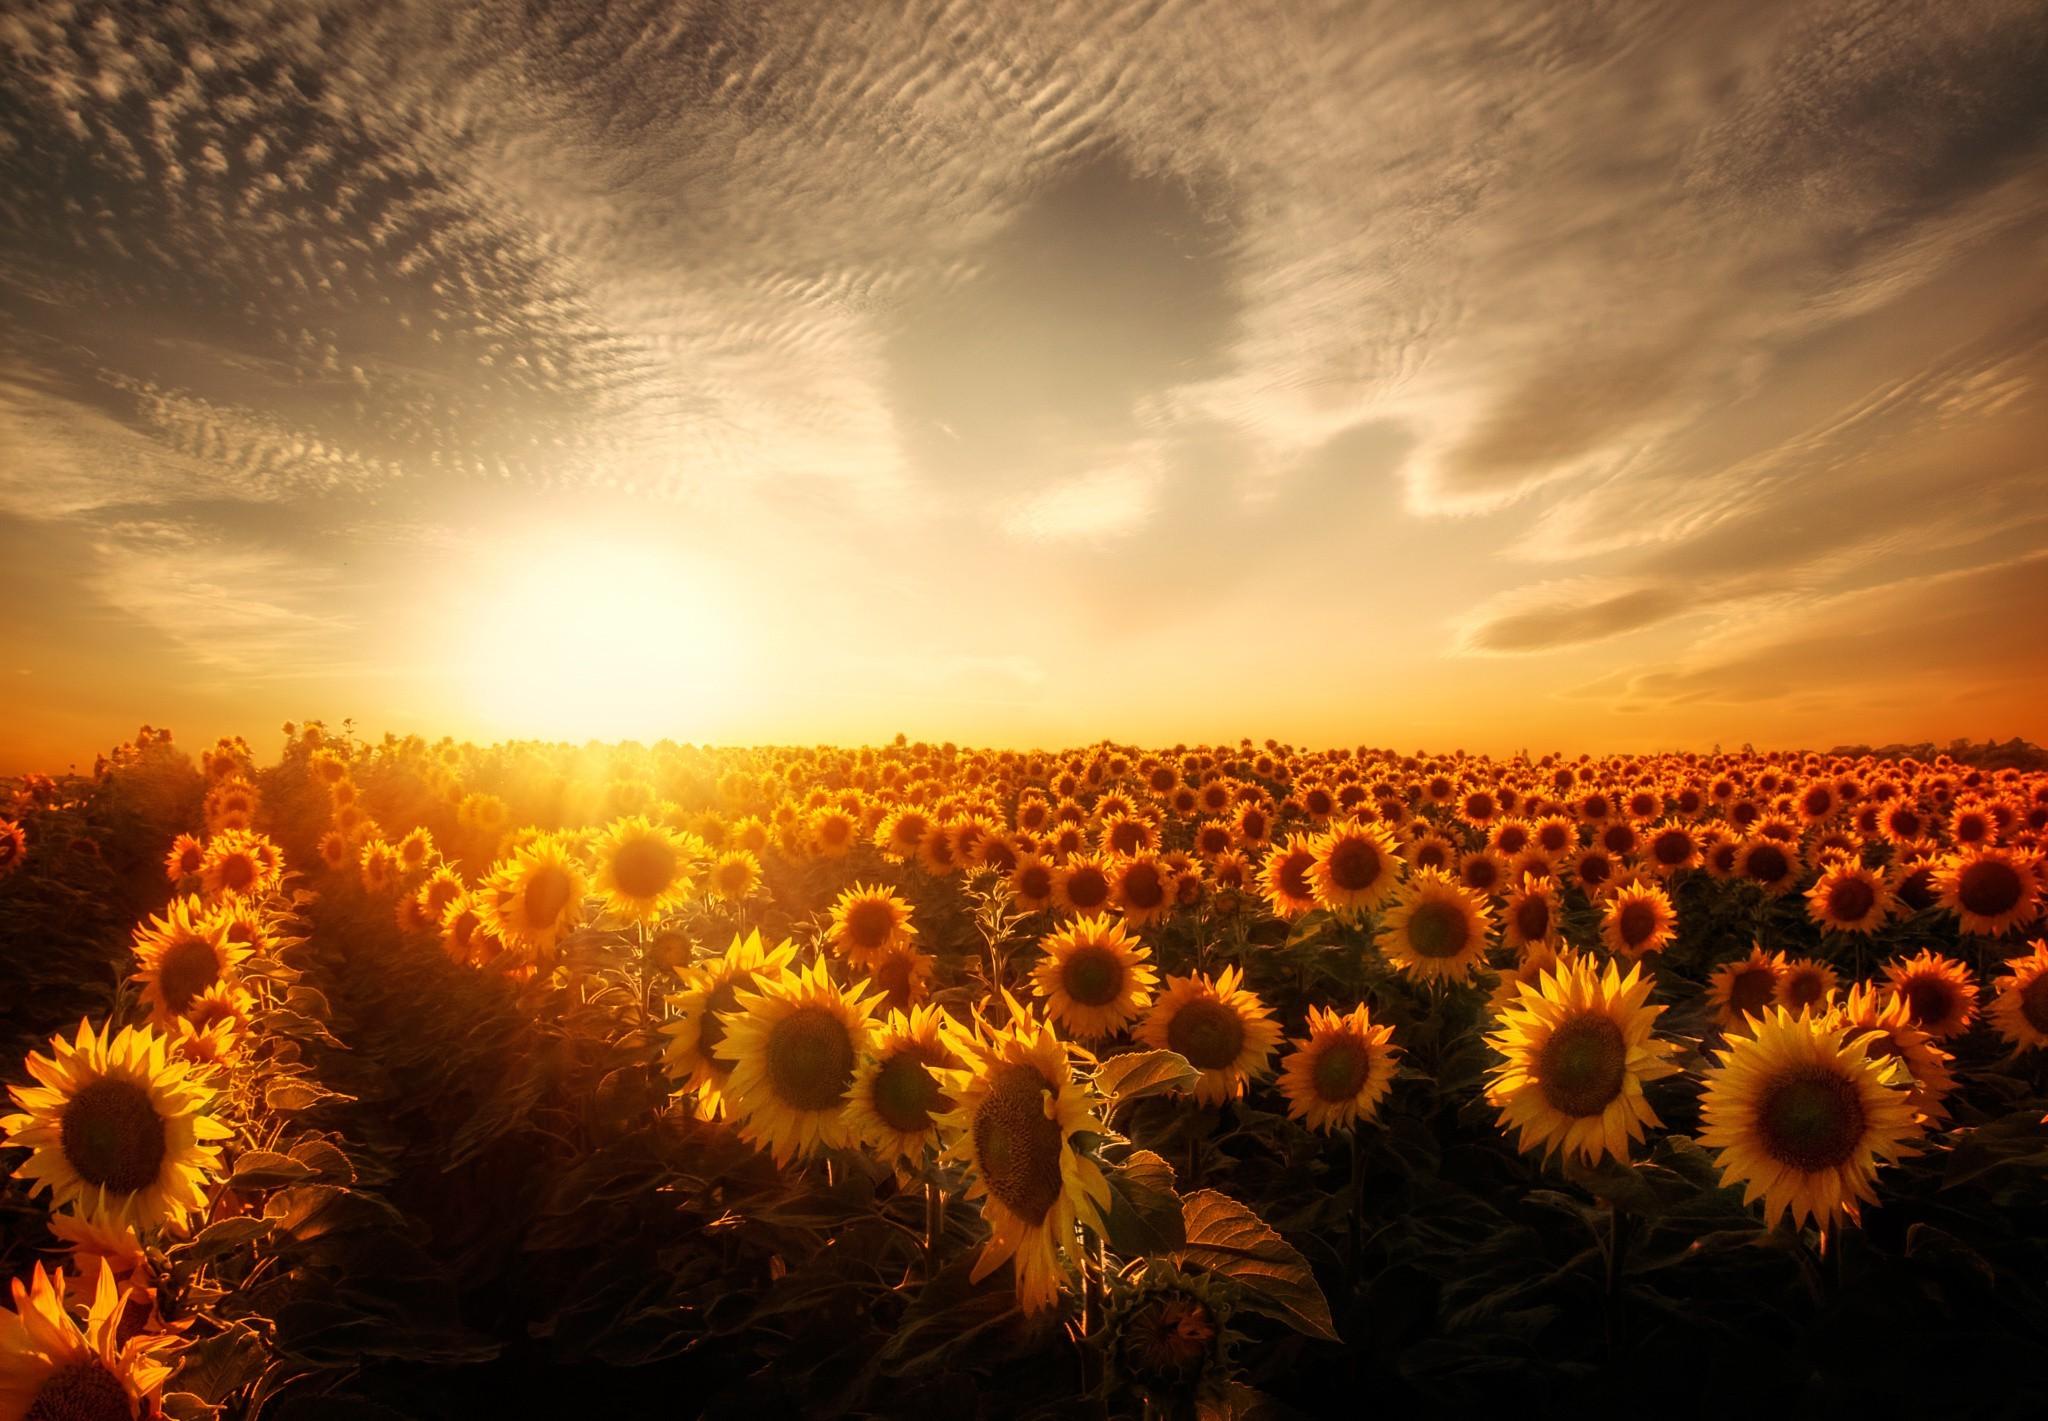 Sunflowers Sunset, HD Nature, 4k Wallpaper, Image, Background